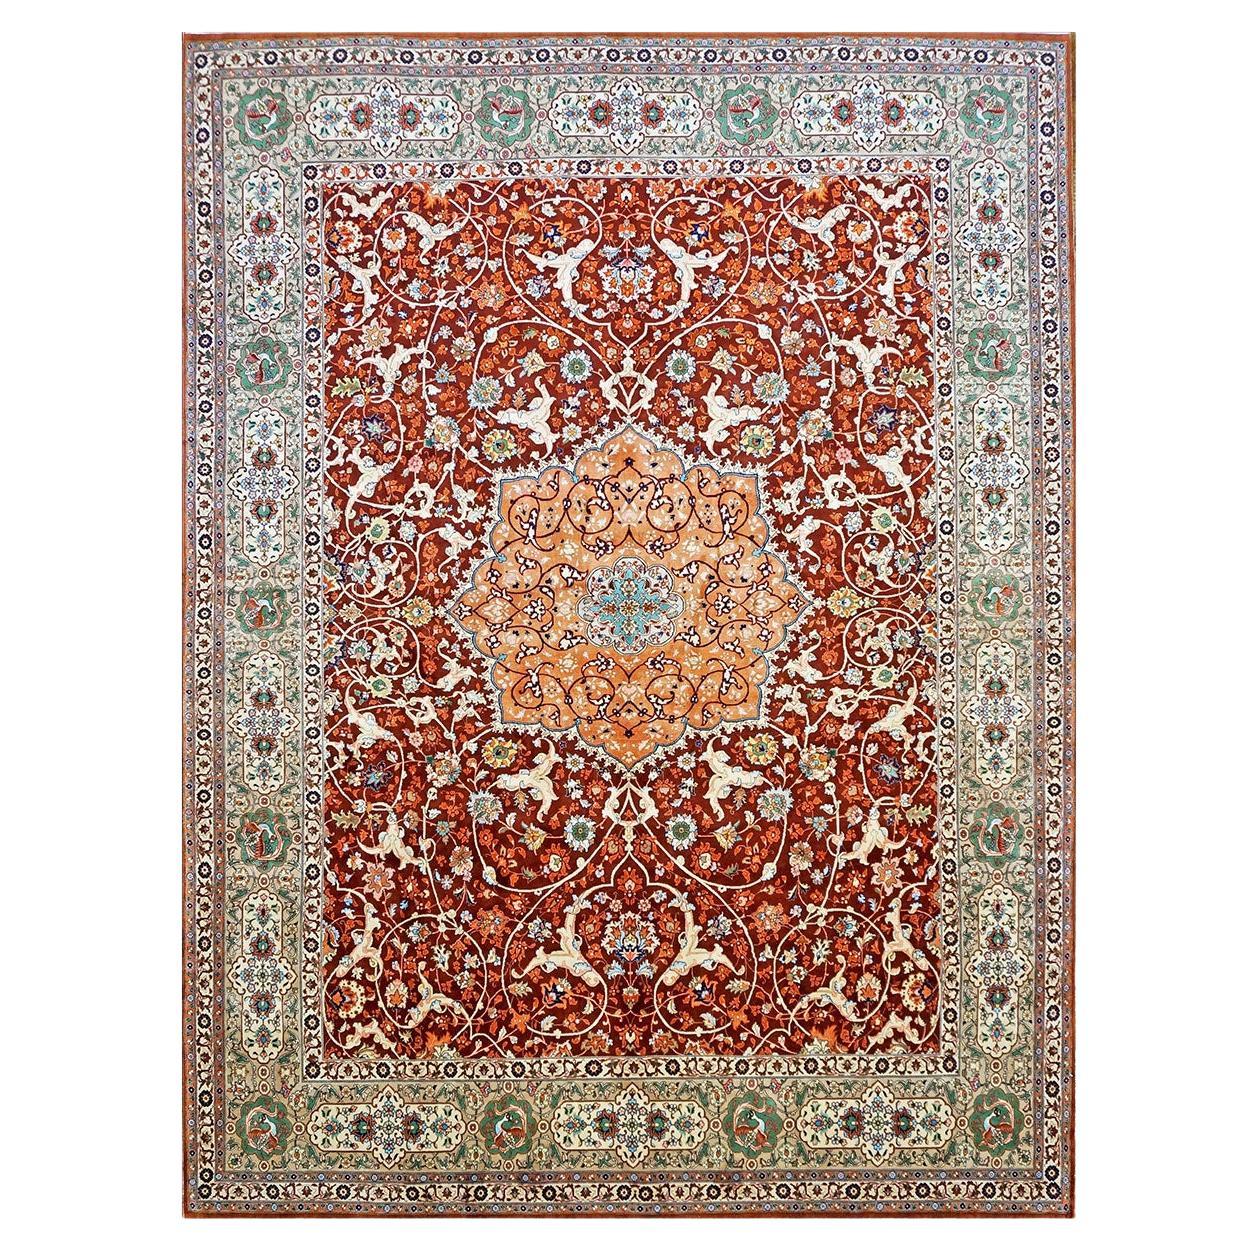 Antique Persian Tabriz 9x12 Red, Ivory, & Green Handmade Area Rug